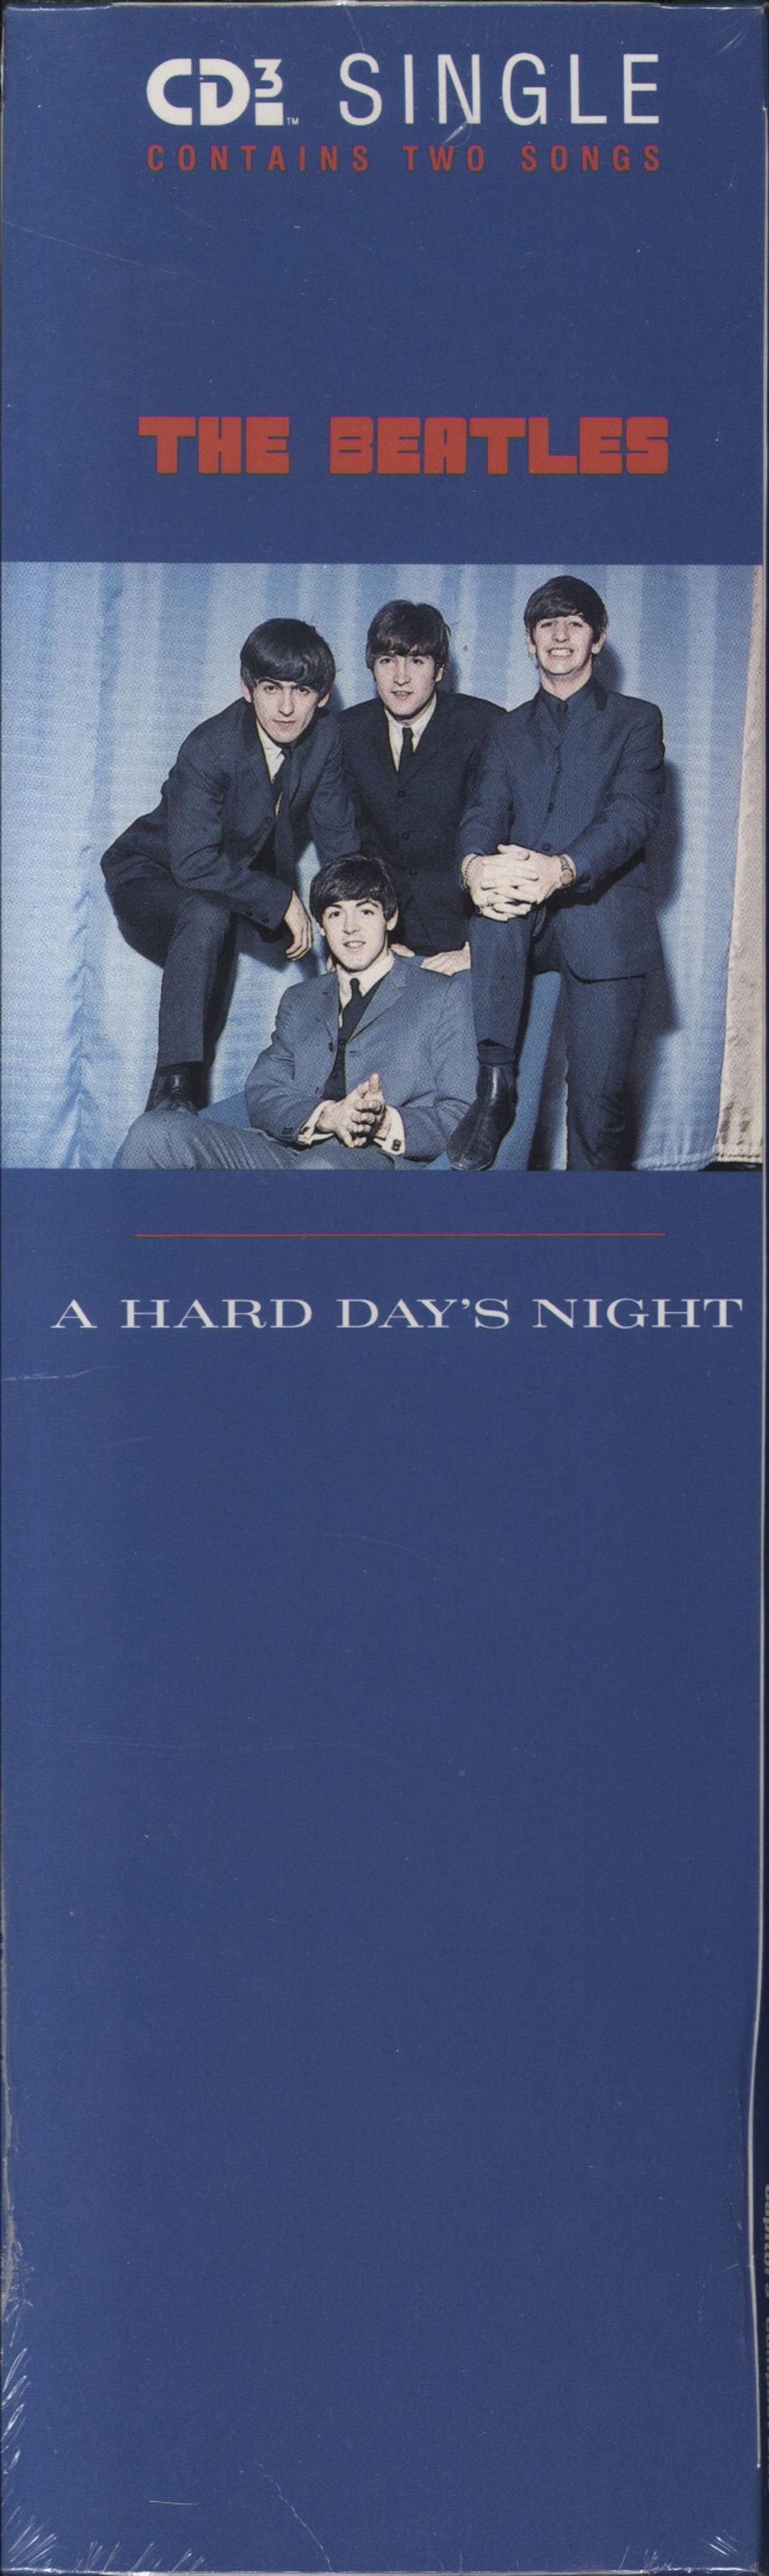 The Beatles A Hard Day's Night - Sealed Long Box US 3 CD Single CD3 C3-44306-2 Capitol 1989